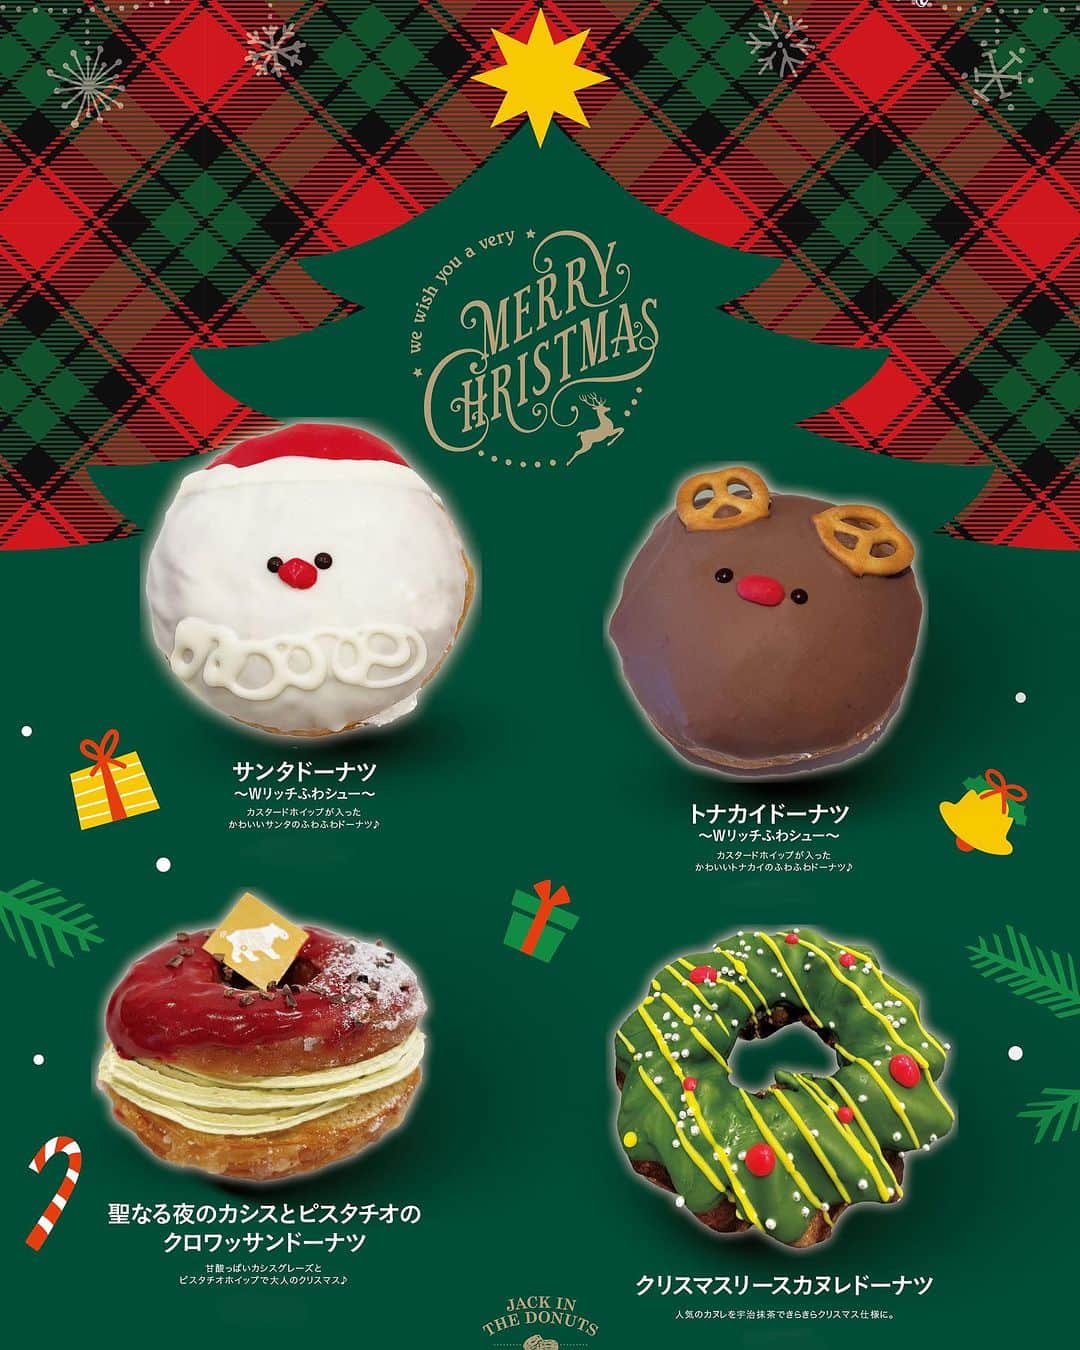 jackinthedonuts -ジャックインザドーナツ-のインスタグラム：「11月15日からクリスマスドーナツ販売開始です🎄  見た目がとってもキュートなサンタとトナカイ🎅🏻🦌 ふわふわドーナツの中には、たっぷりクリームが入っています🫶  ちょっぴり大人向けなカシスとピスタチオのドーナツも販売中です︎💕︎ カシスの甘酸っぱさと、ピスタチオのほんのり甘さがたまりません🥰  そして、人気のカヌレドーナツもクリスマスリースに変身🎁  食べるのがもったいないくらいかわいいドーナツで 是非クリスマスパーティーを盛り上げましょう🎉  （※クリスマスまでの販売となっております）  #jackinthedonuts #ジャックインザドーナツ #🍩  #新作jack #期間限定スイーツ #新商品 #クリスマス #クリスマススイーツ #Xmas #christmas  #サンタドーナツ #トナカイドーナツ #聖なる夜のカシスとピスタチオのクロワッサンドーナツ #クリスマスリースカヌレドーナツ  #ドーナツ #ドーナツ好き #ドーナツ専門店 #おうちおやつ #手土産  #お土産スイーツ #スイーツ #デザート」